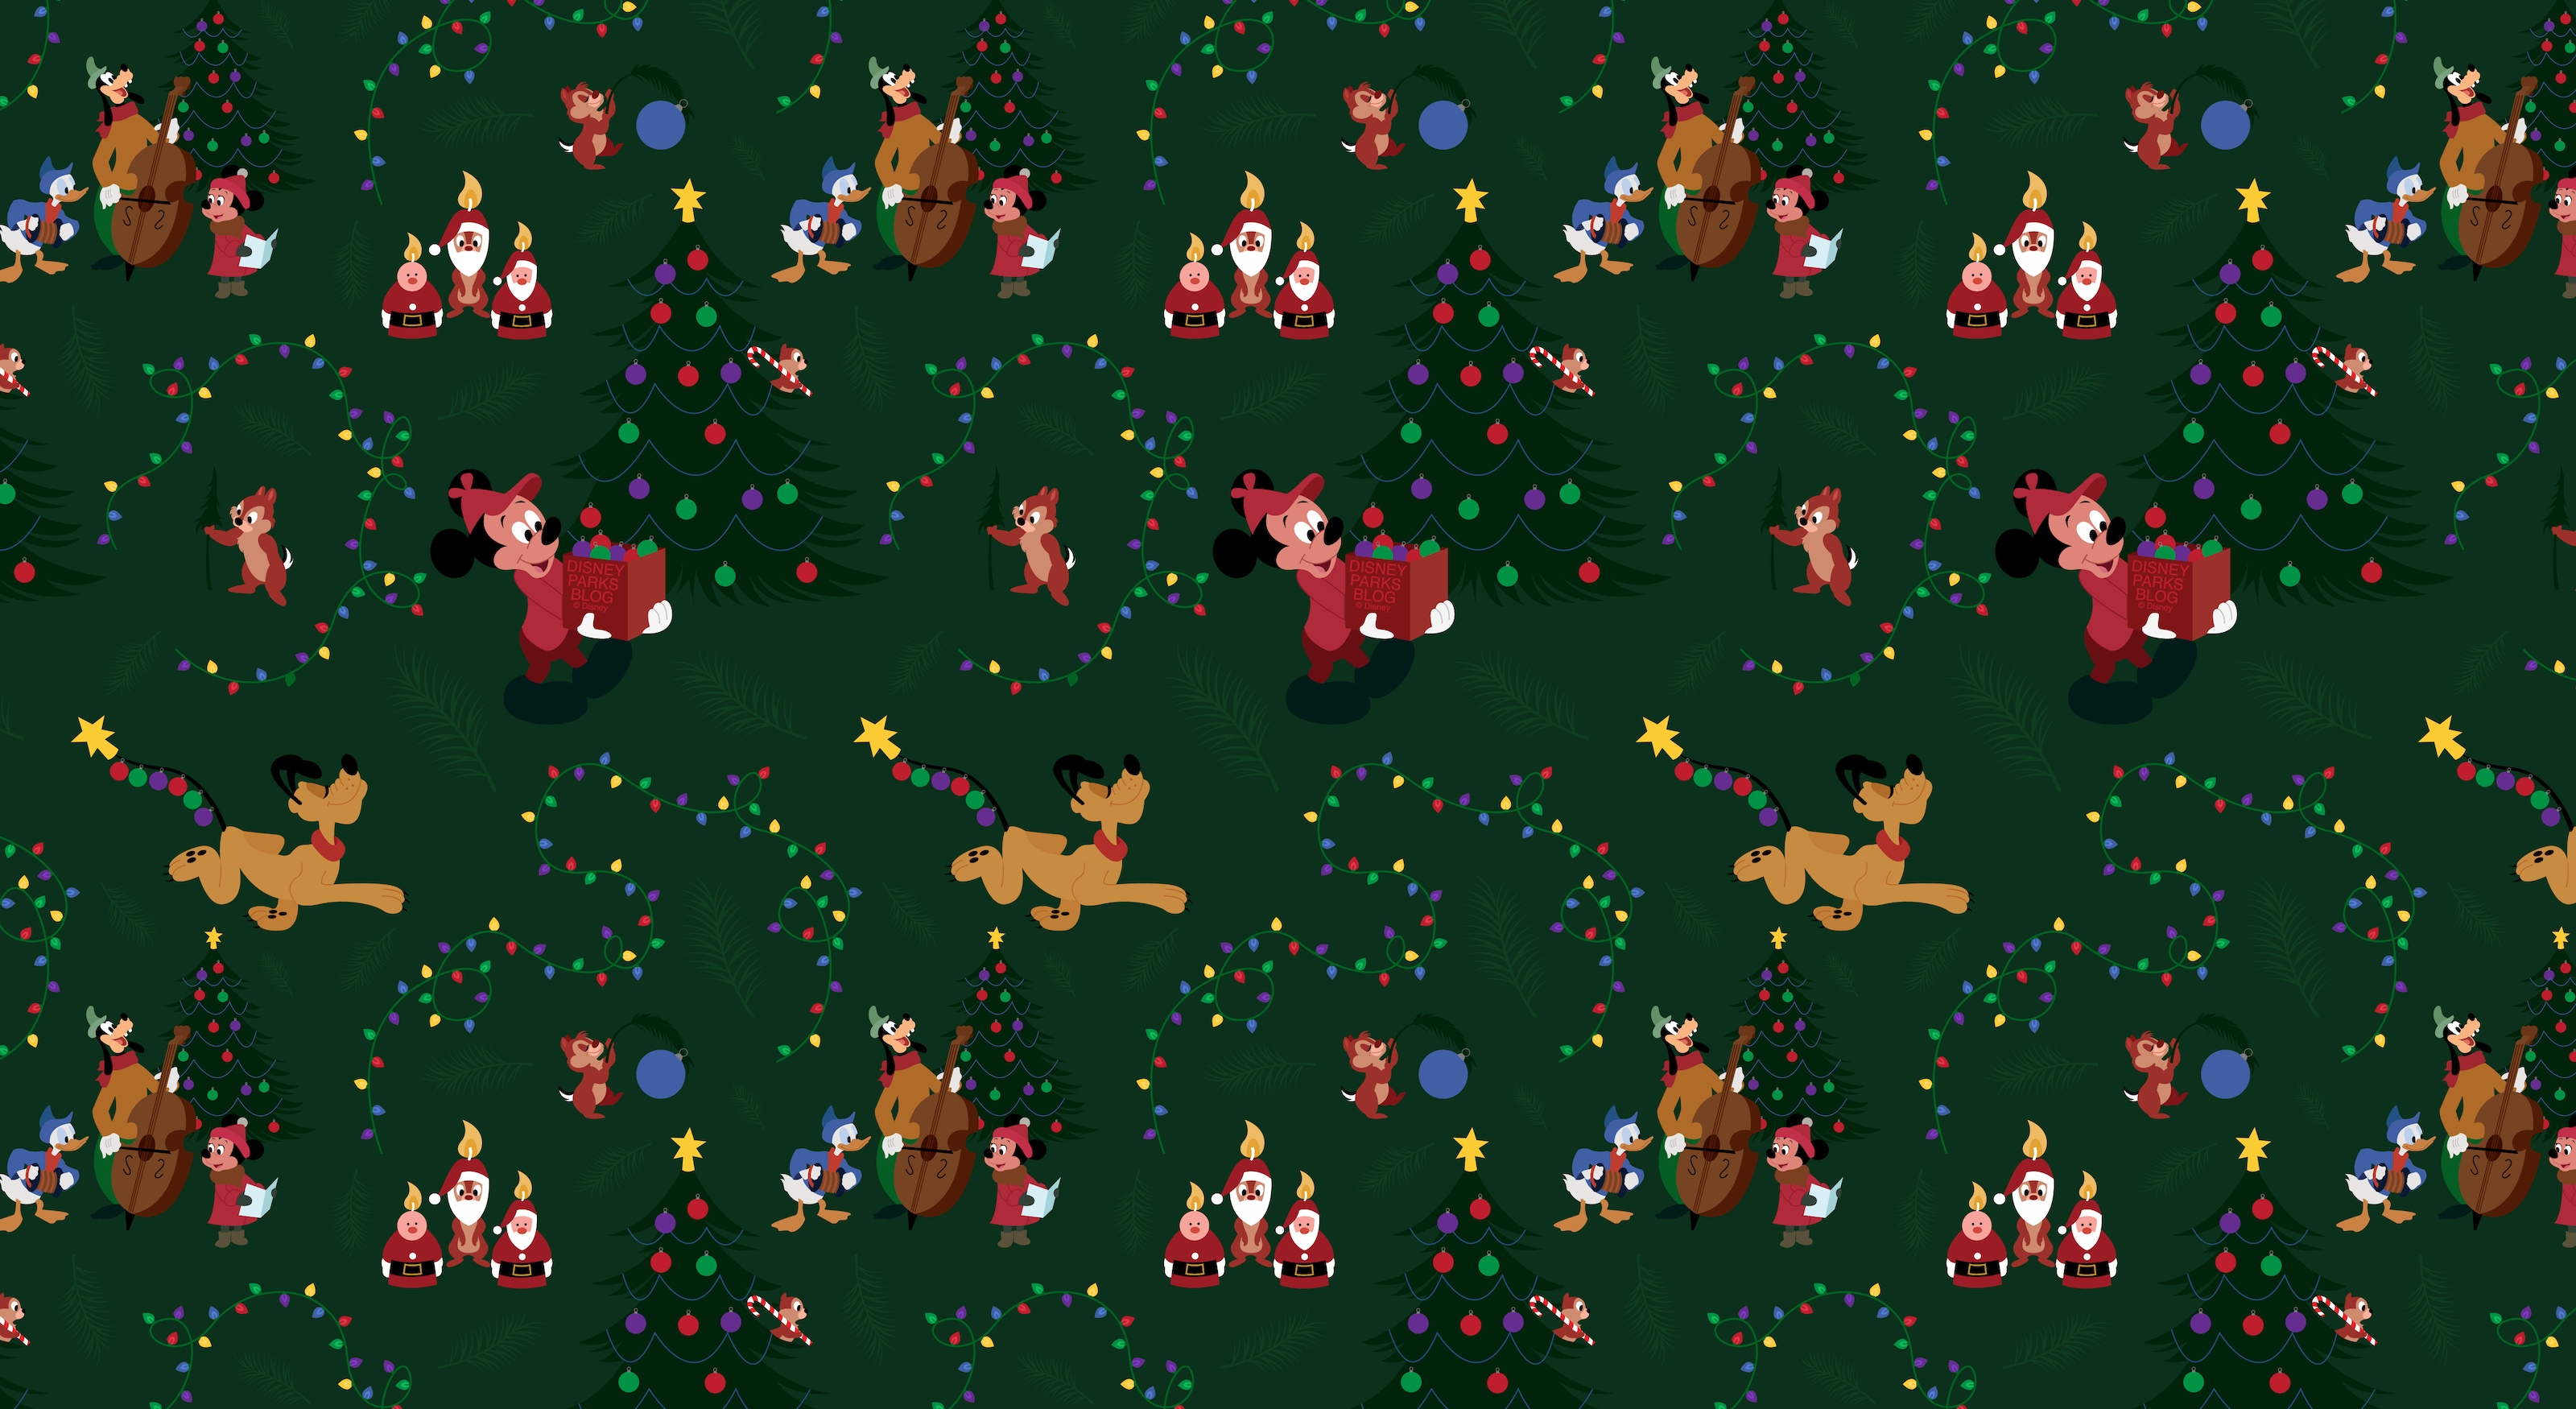 2019 Mickey Mouse Pluto Christmas Wallpaper Desktop Ipad Disney Parks Blog